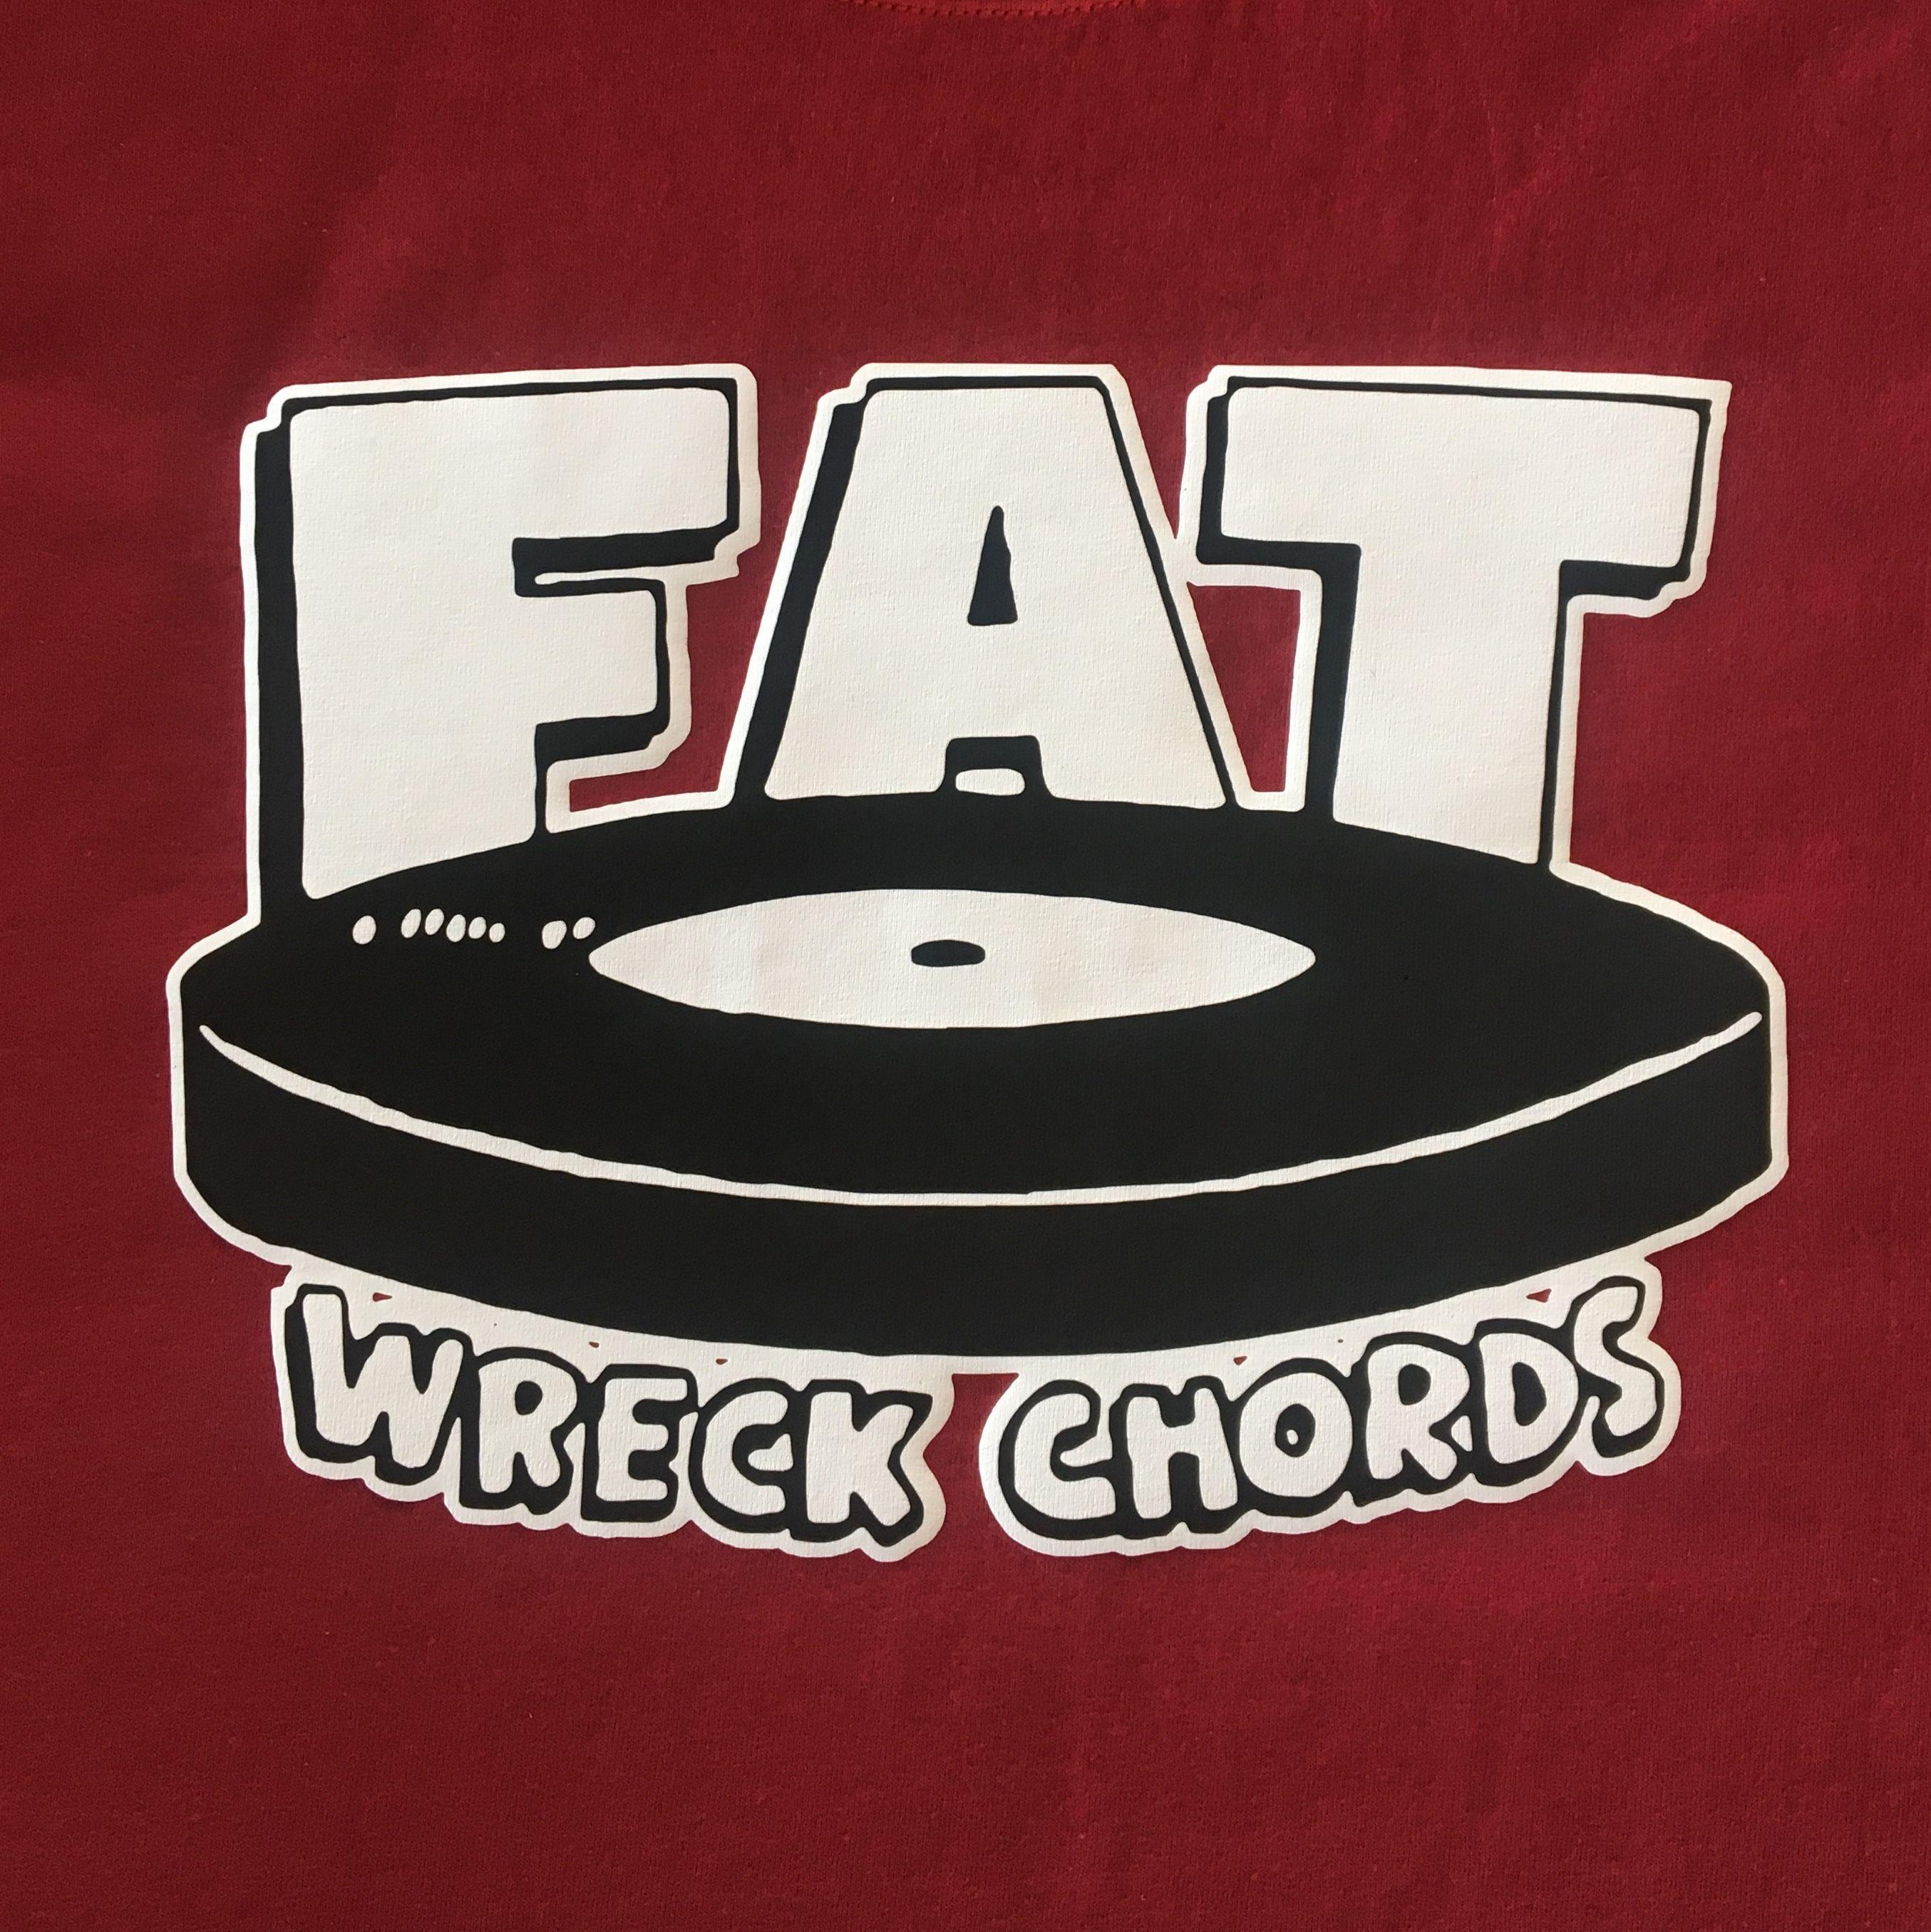 Wreck Logo - Fat Wreck Chords. DIY shirts. Diy shirt, Logos, Chevrolet logo